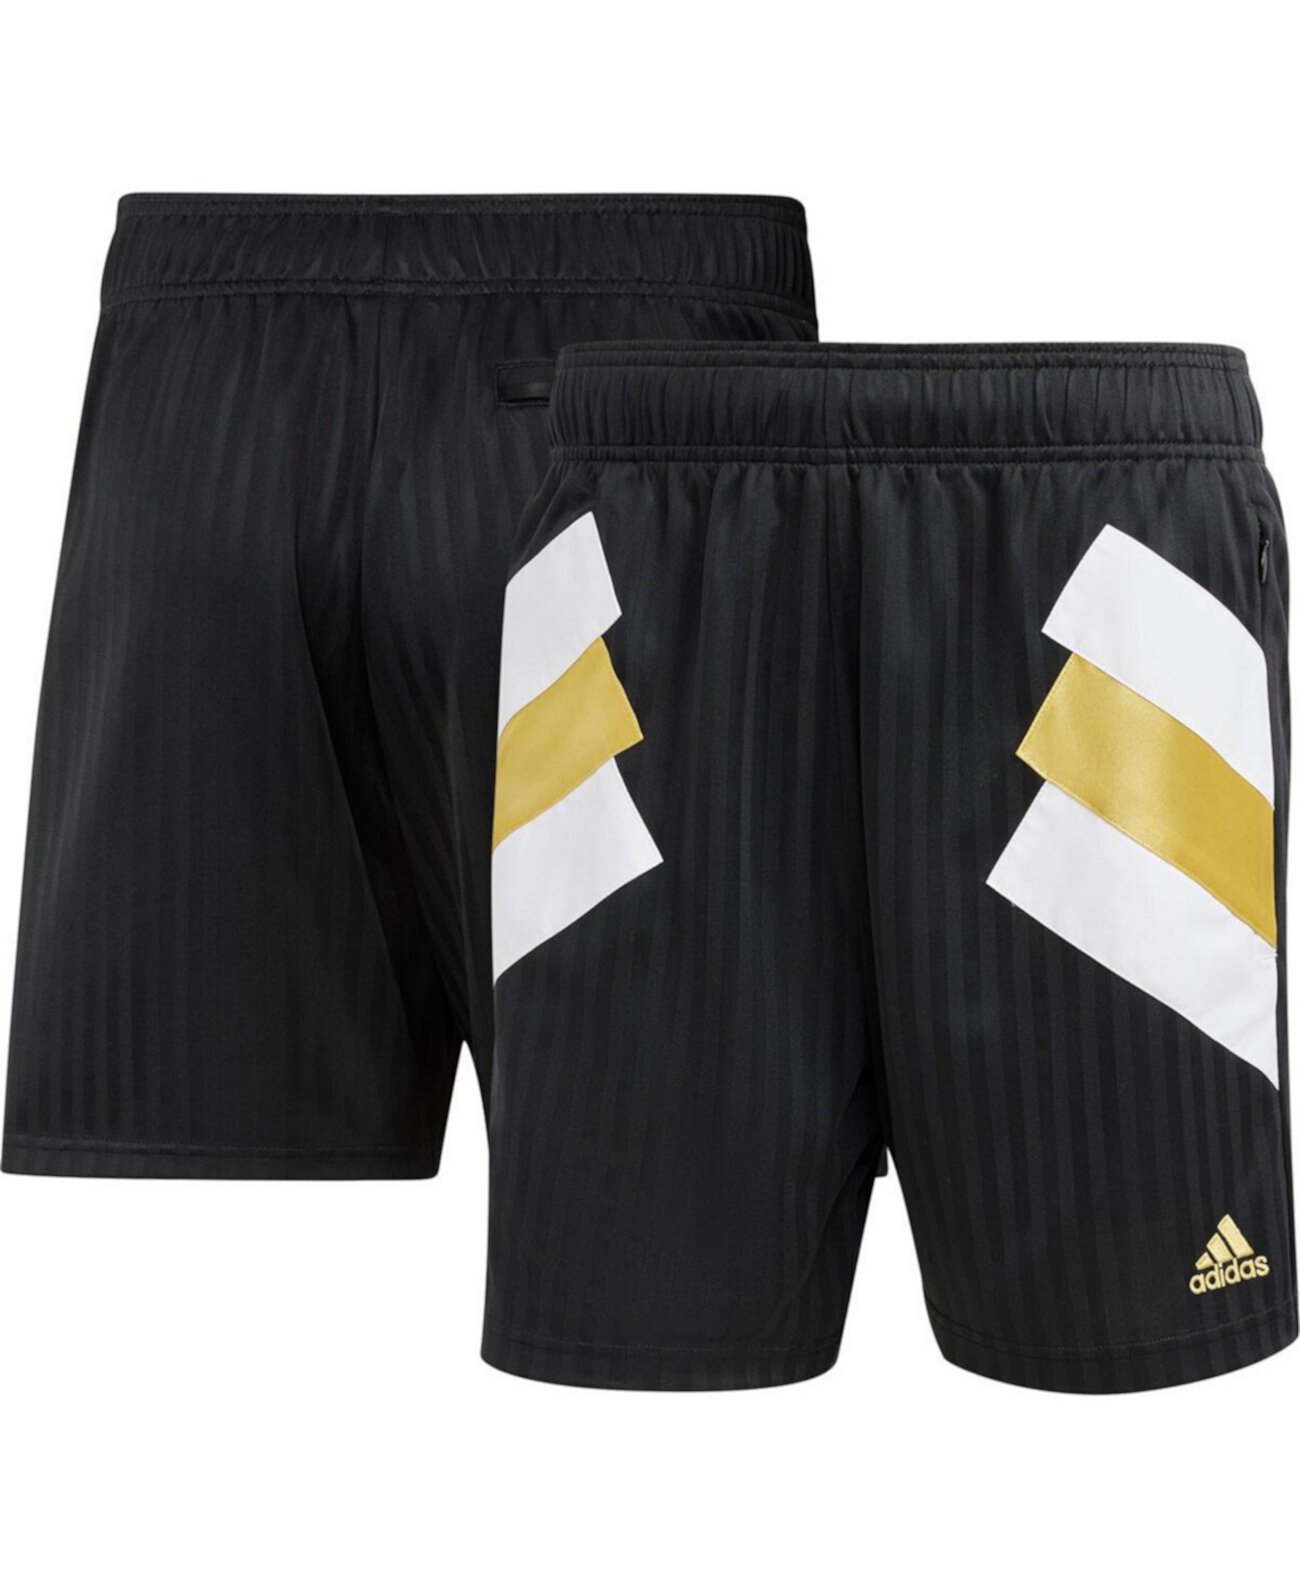 Мужские черные шорты Juventus Football Icon Adidas